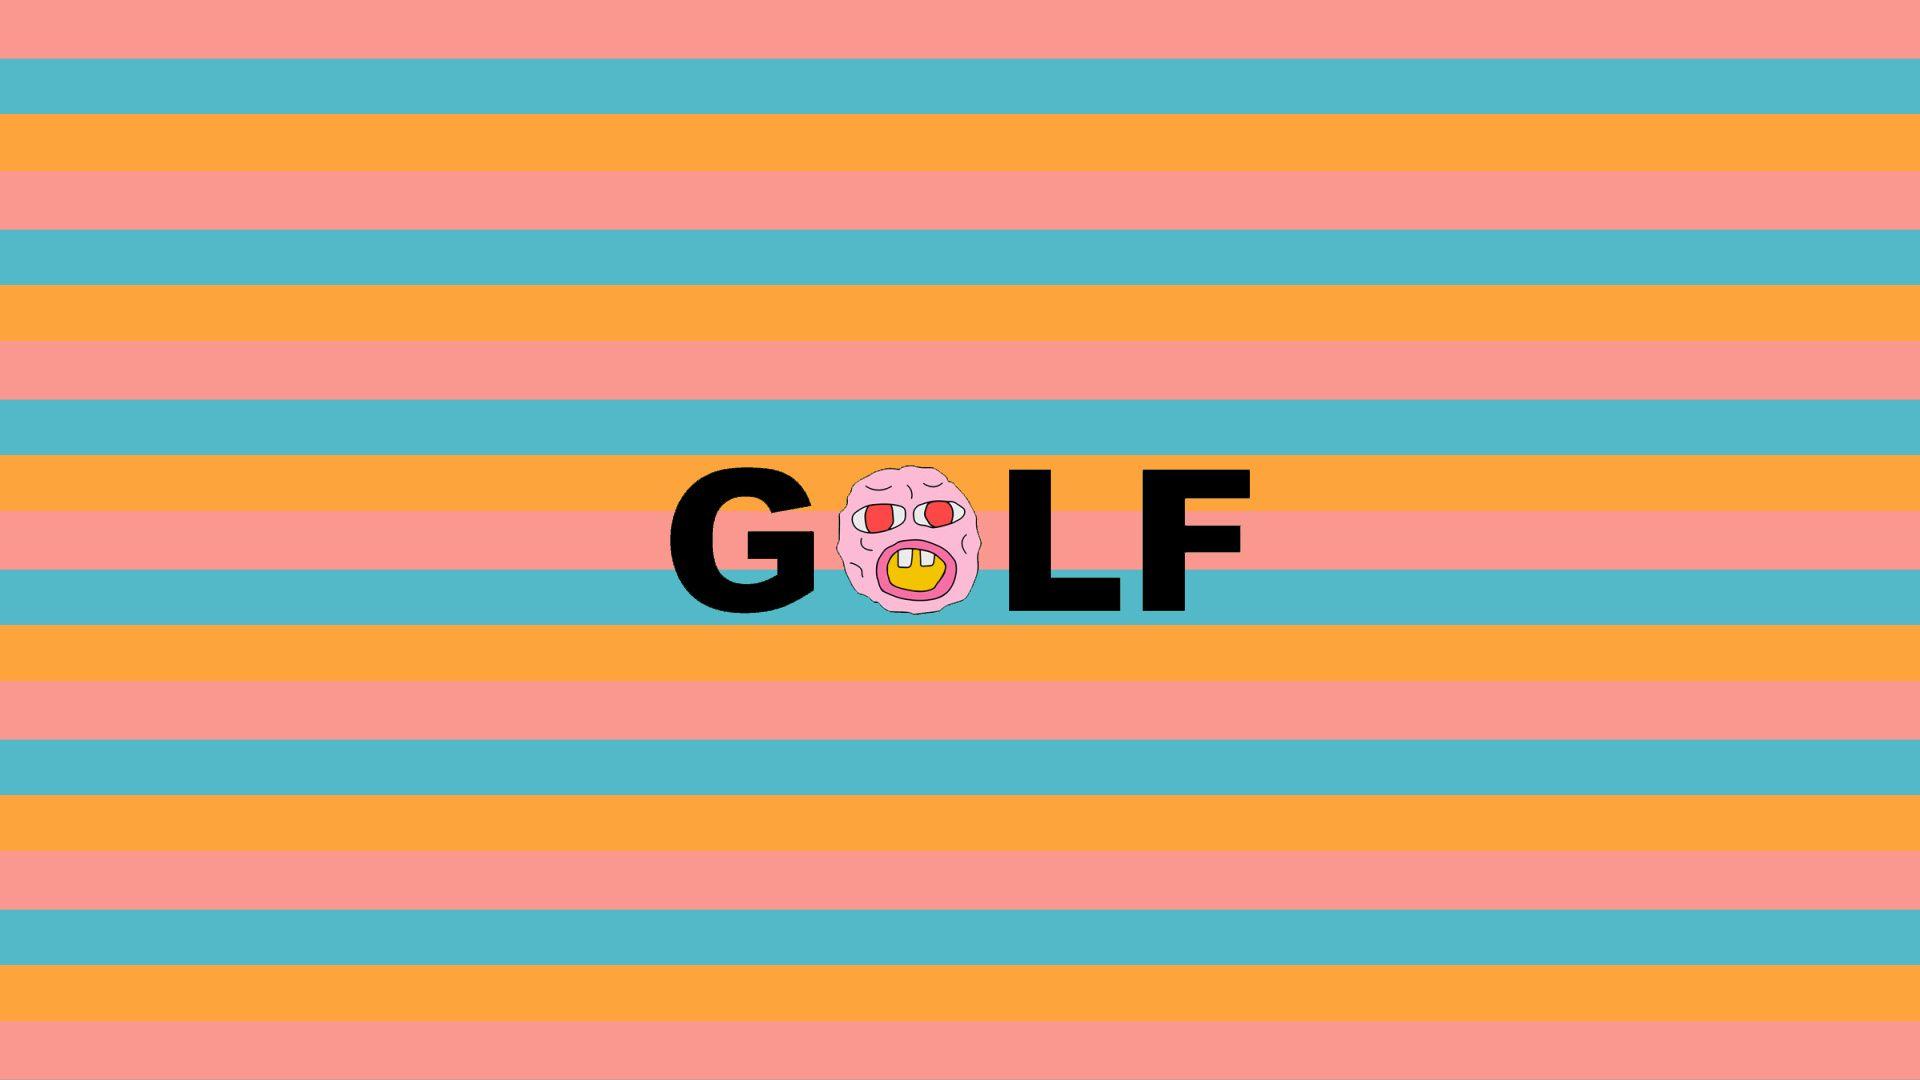 Simple Golf CherryBomb Wallpaper I Made